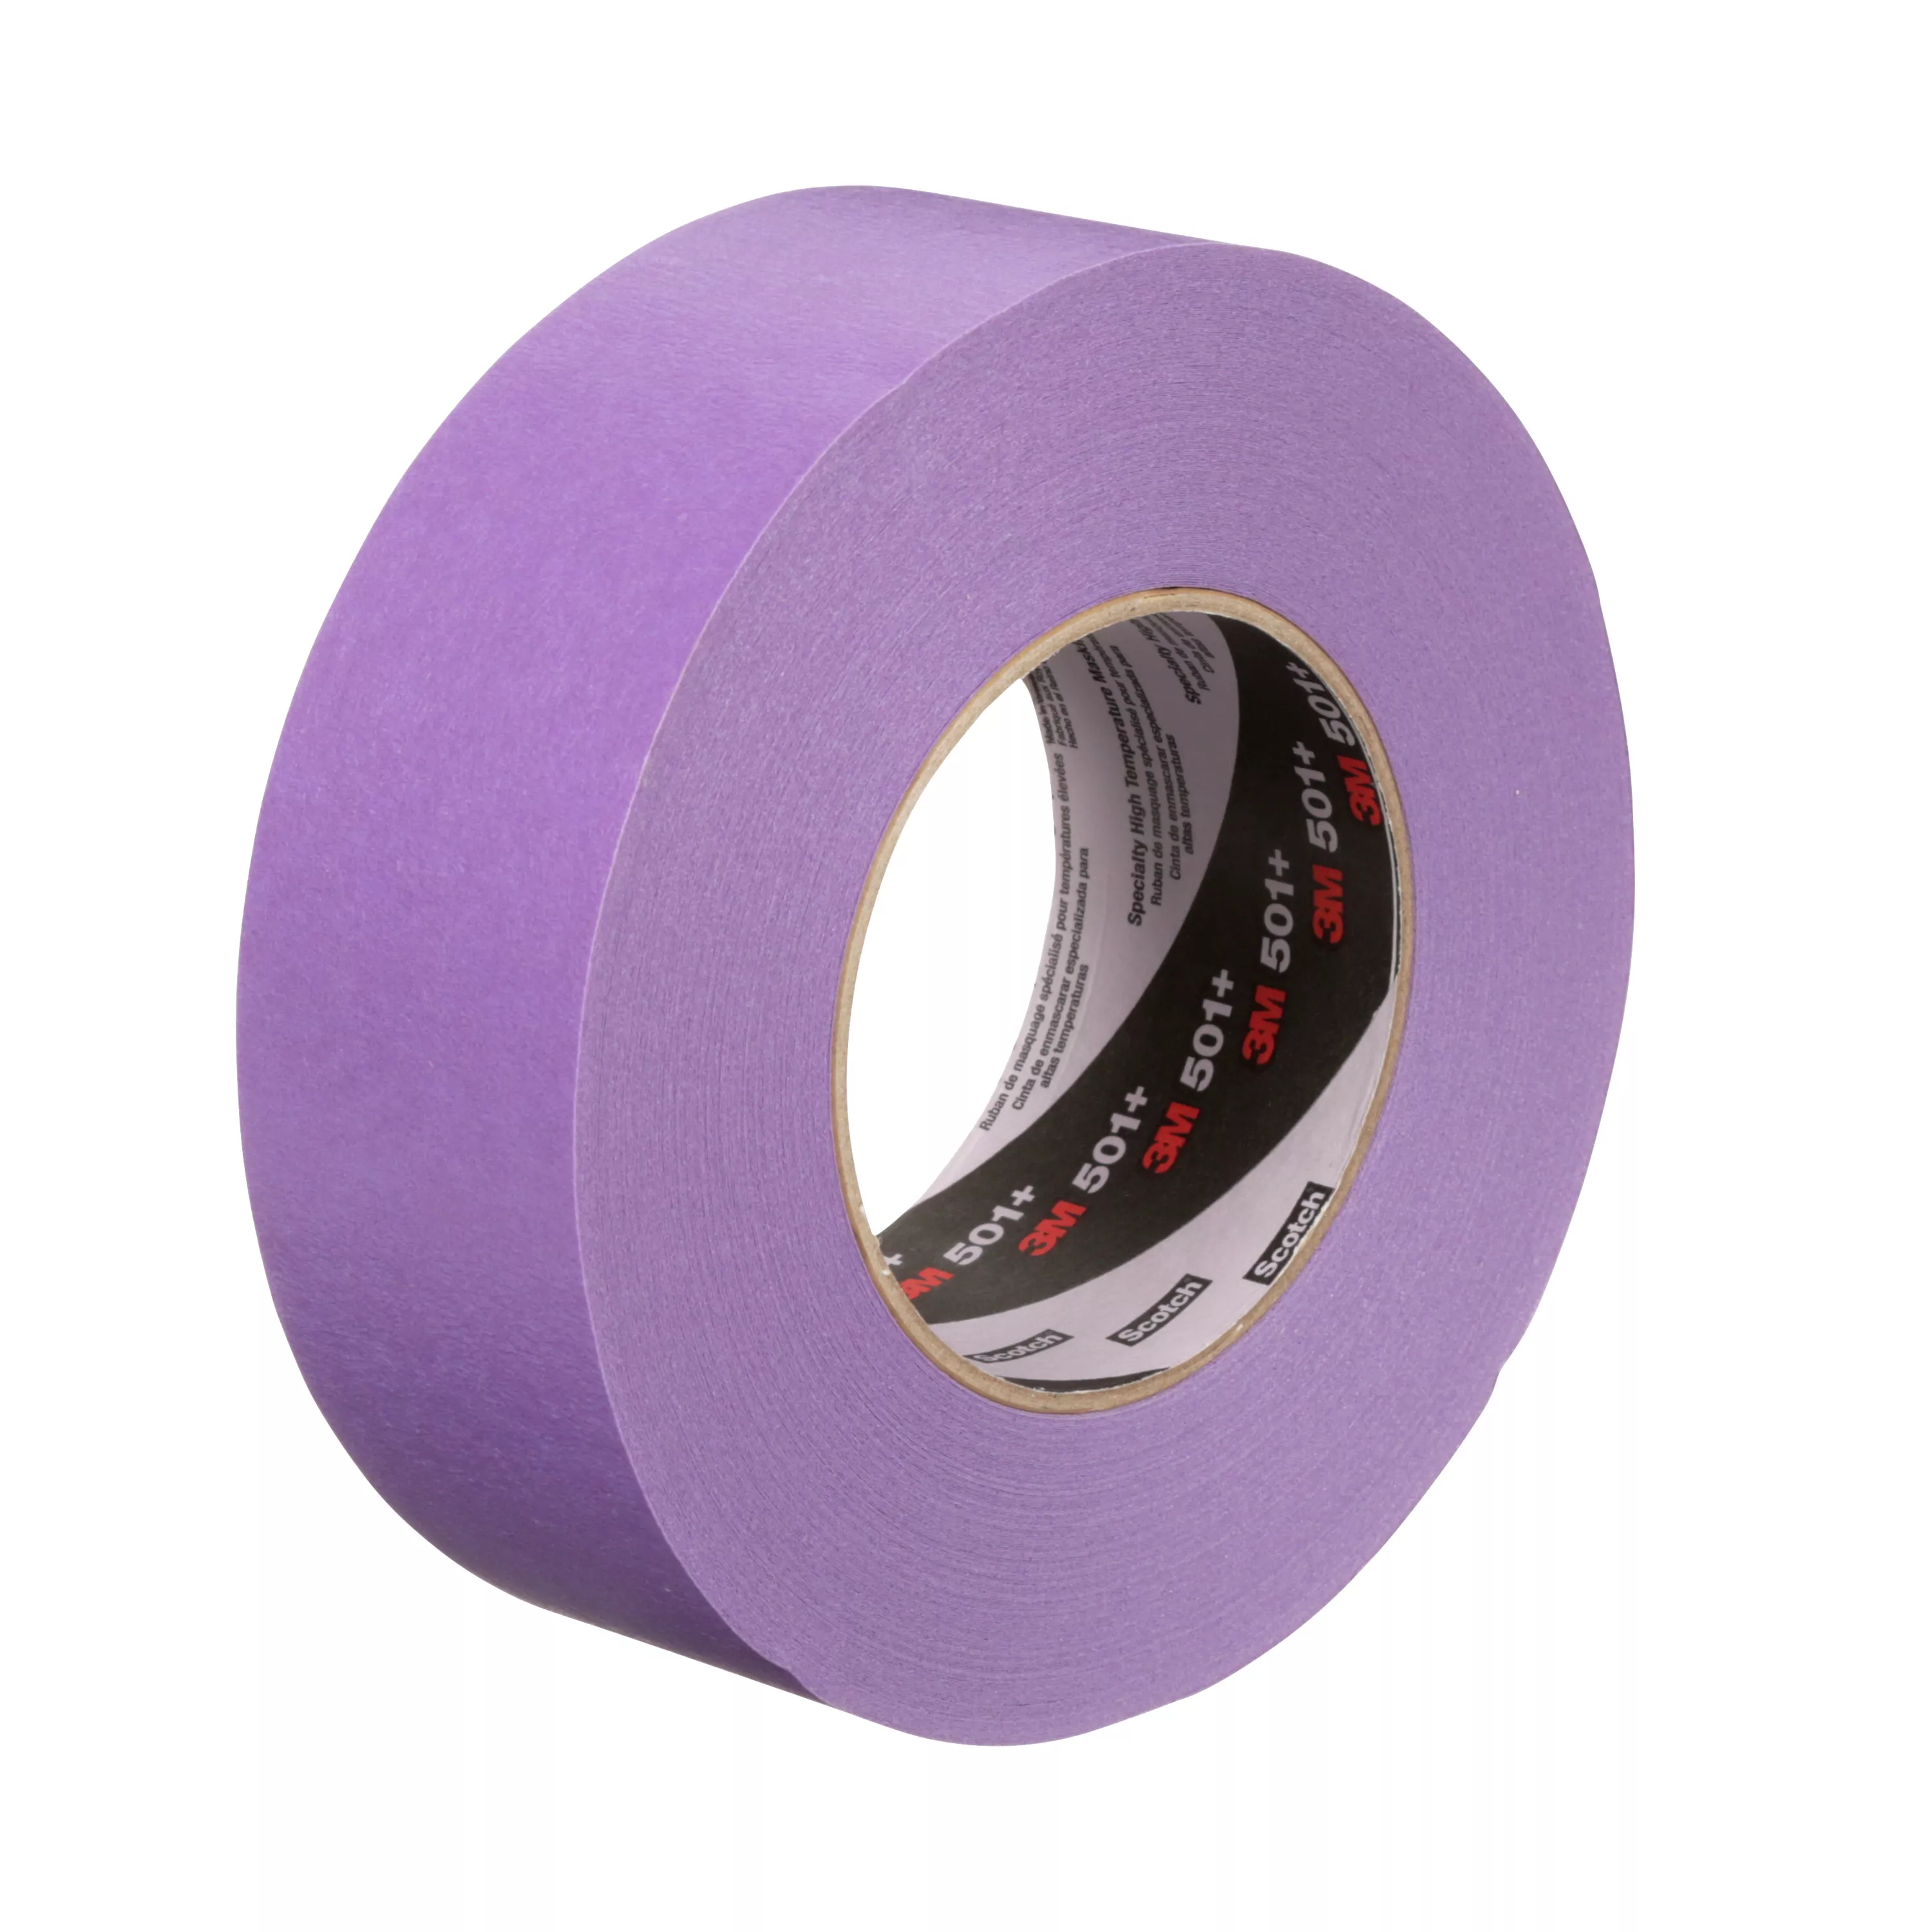 3M™ Specialty High Temperature Masking Tape 501+, Purple, 1490 mm x 55
m, 6.0 mil, 7 Rolls/Case